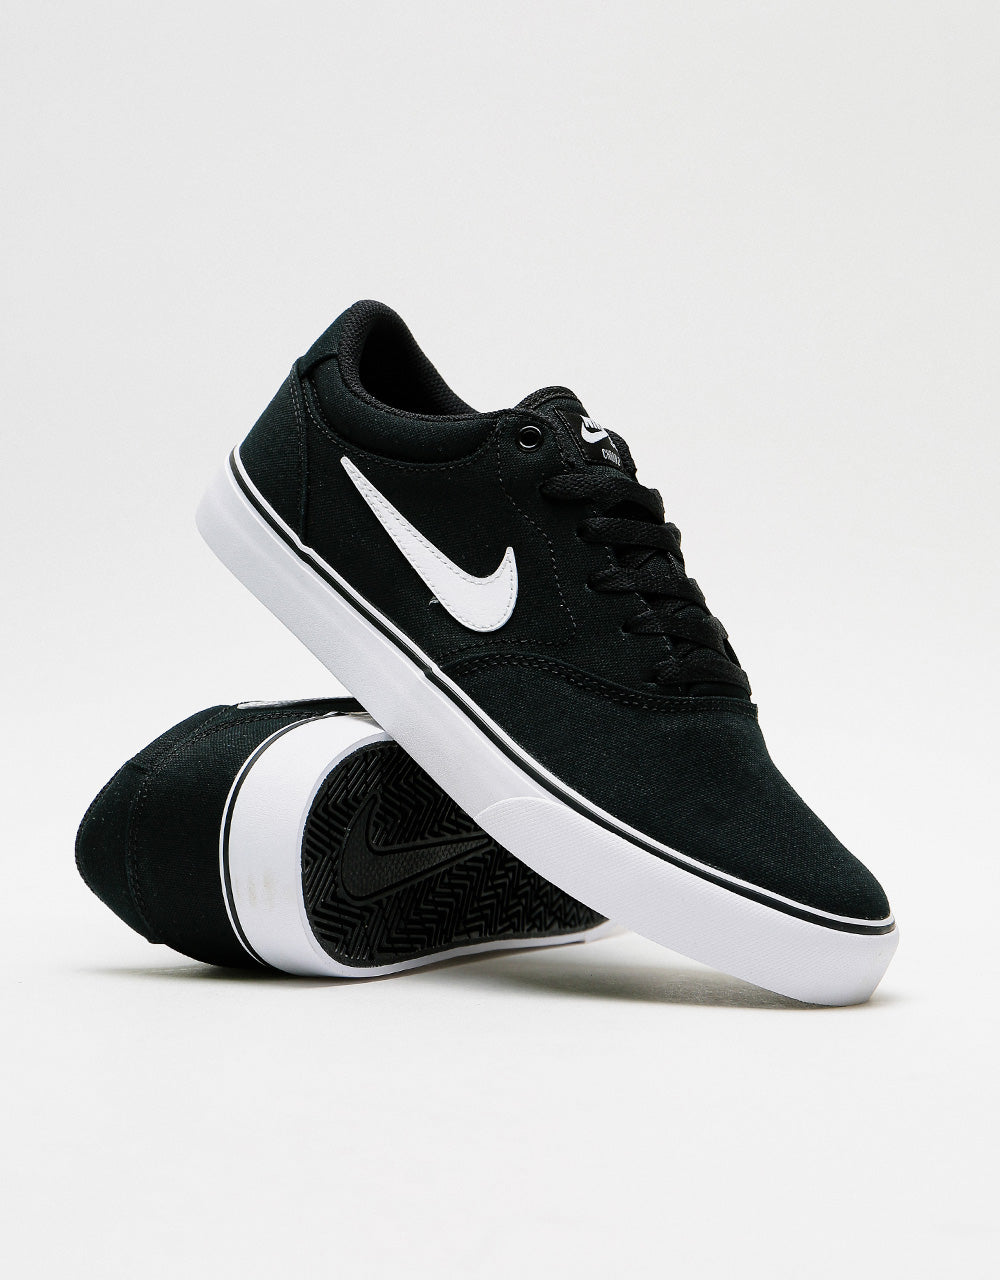 Nike SB Chron 2 Canvas Skate Shoes - Black/White-Black